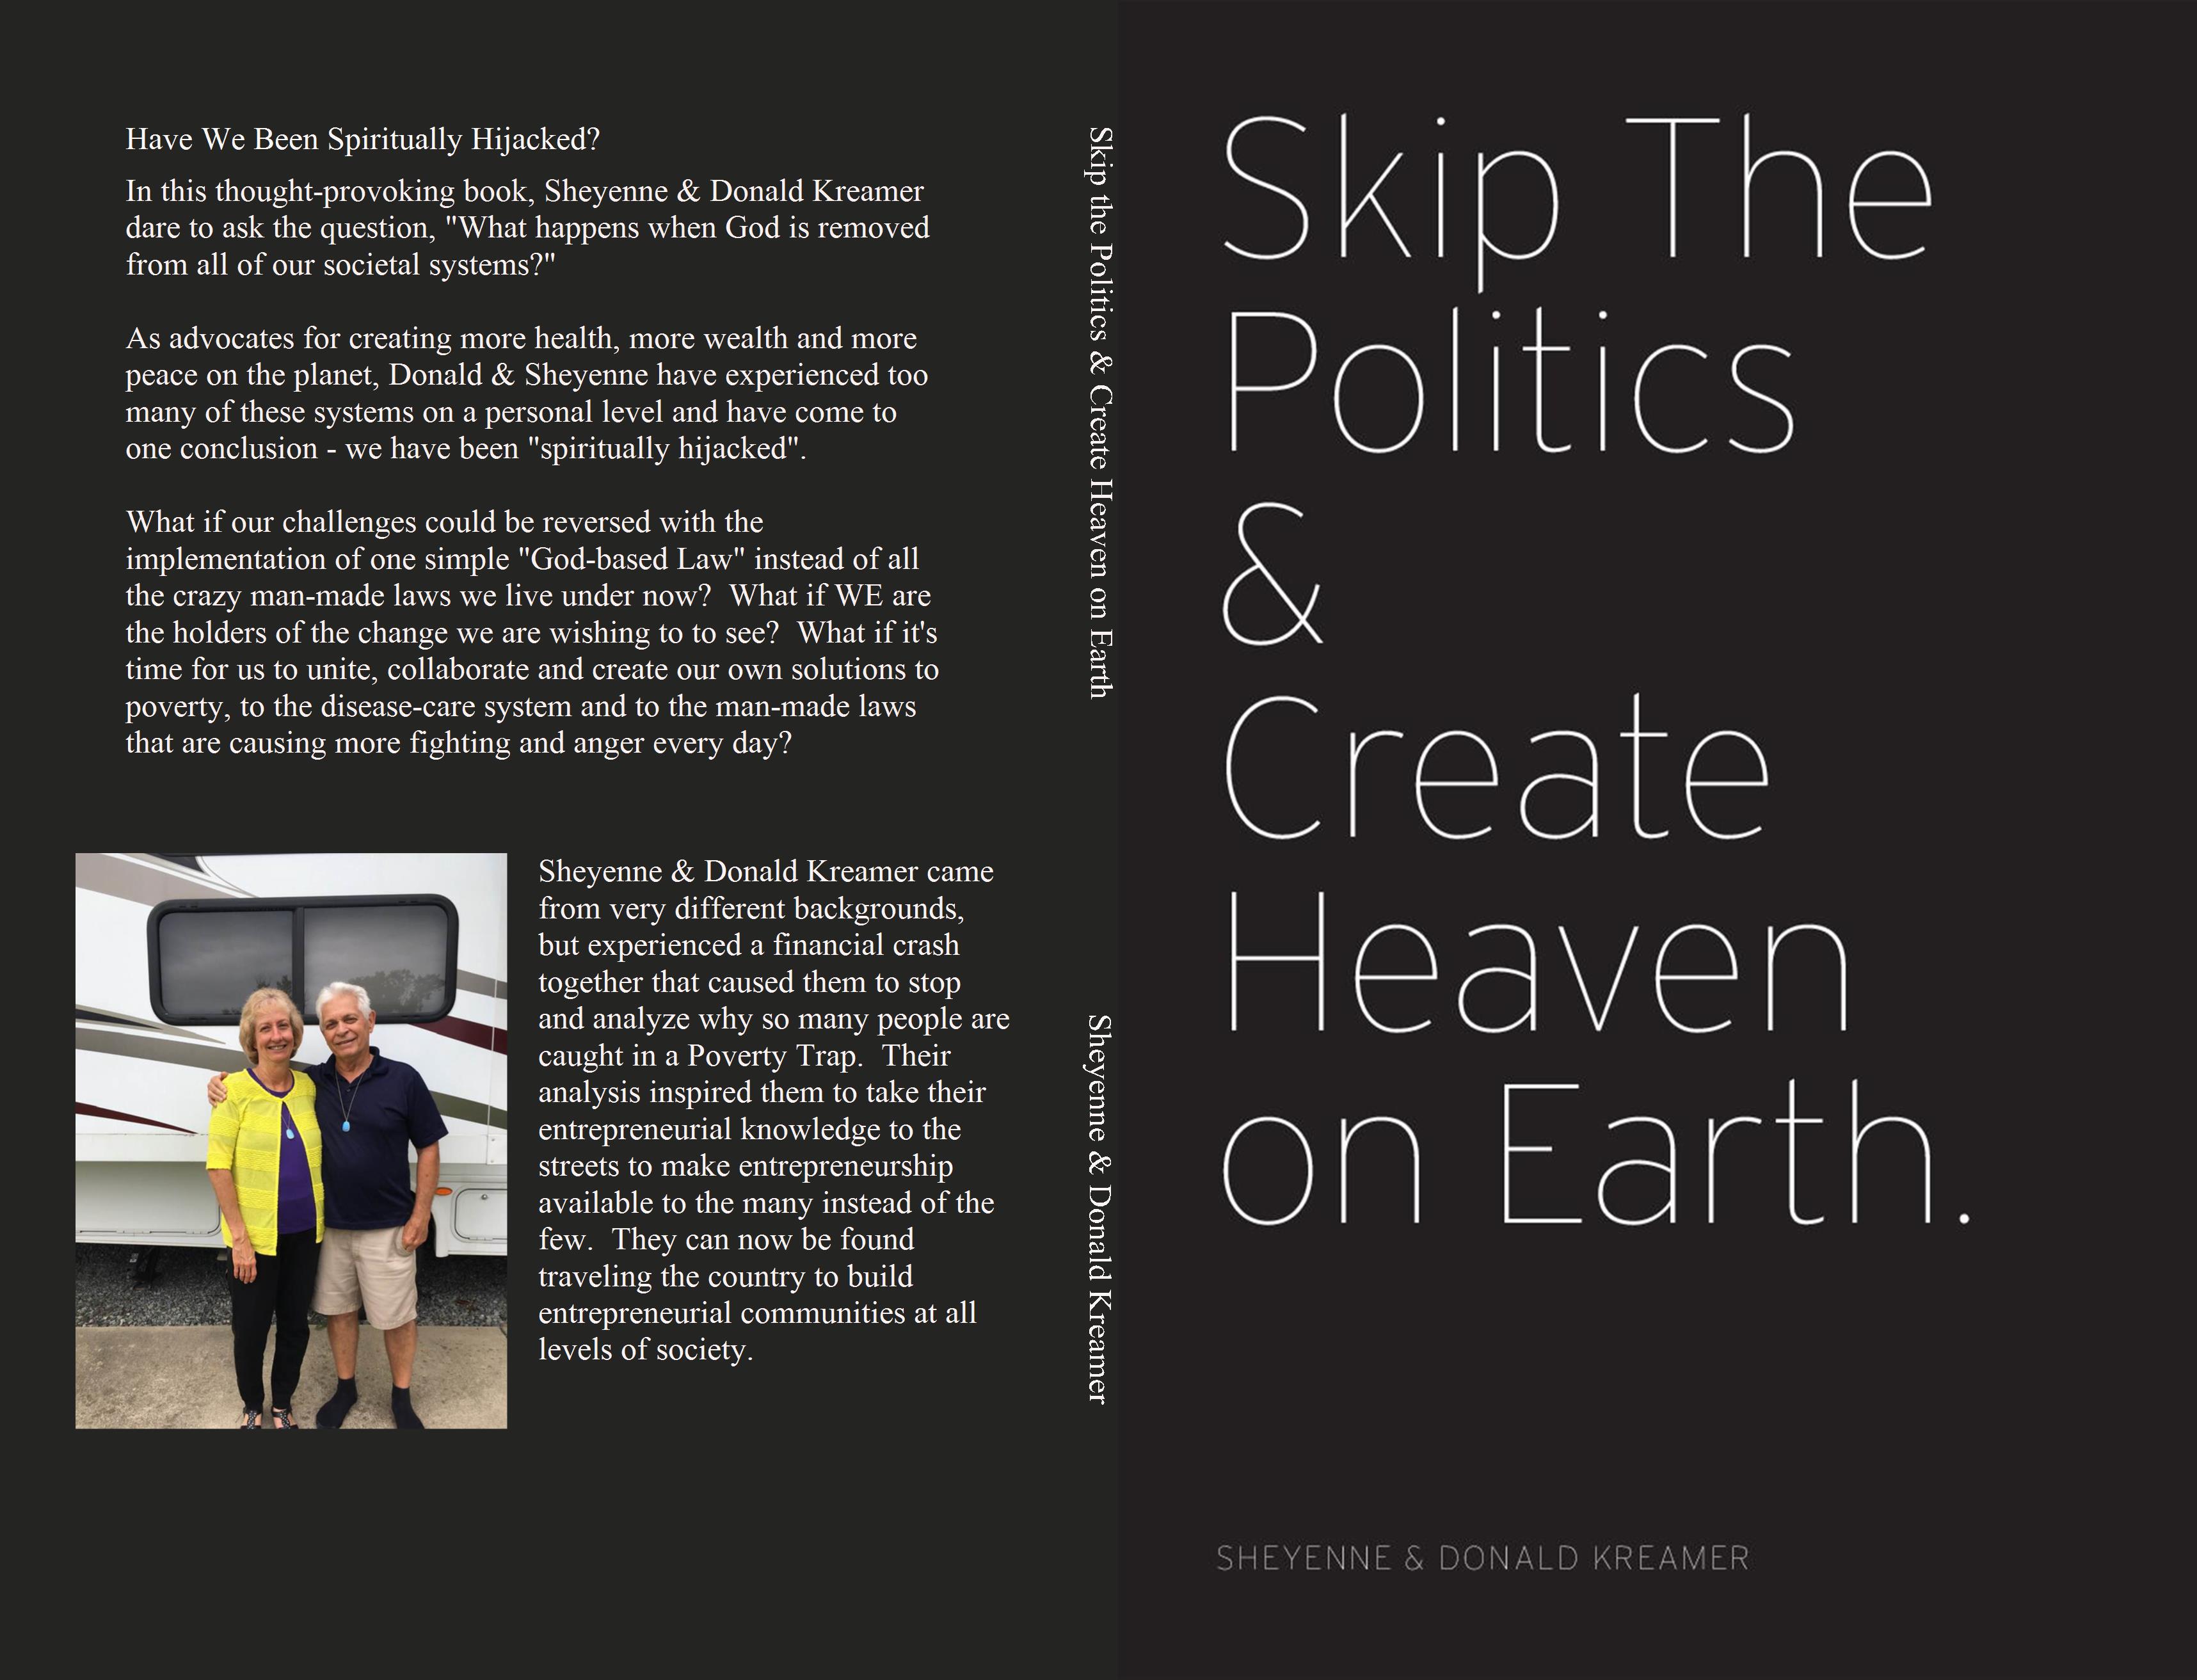 Skip the Politics & Create Heaven on Earth cover image